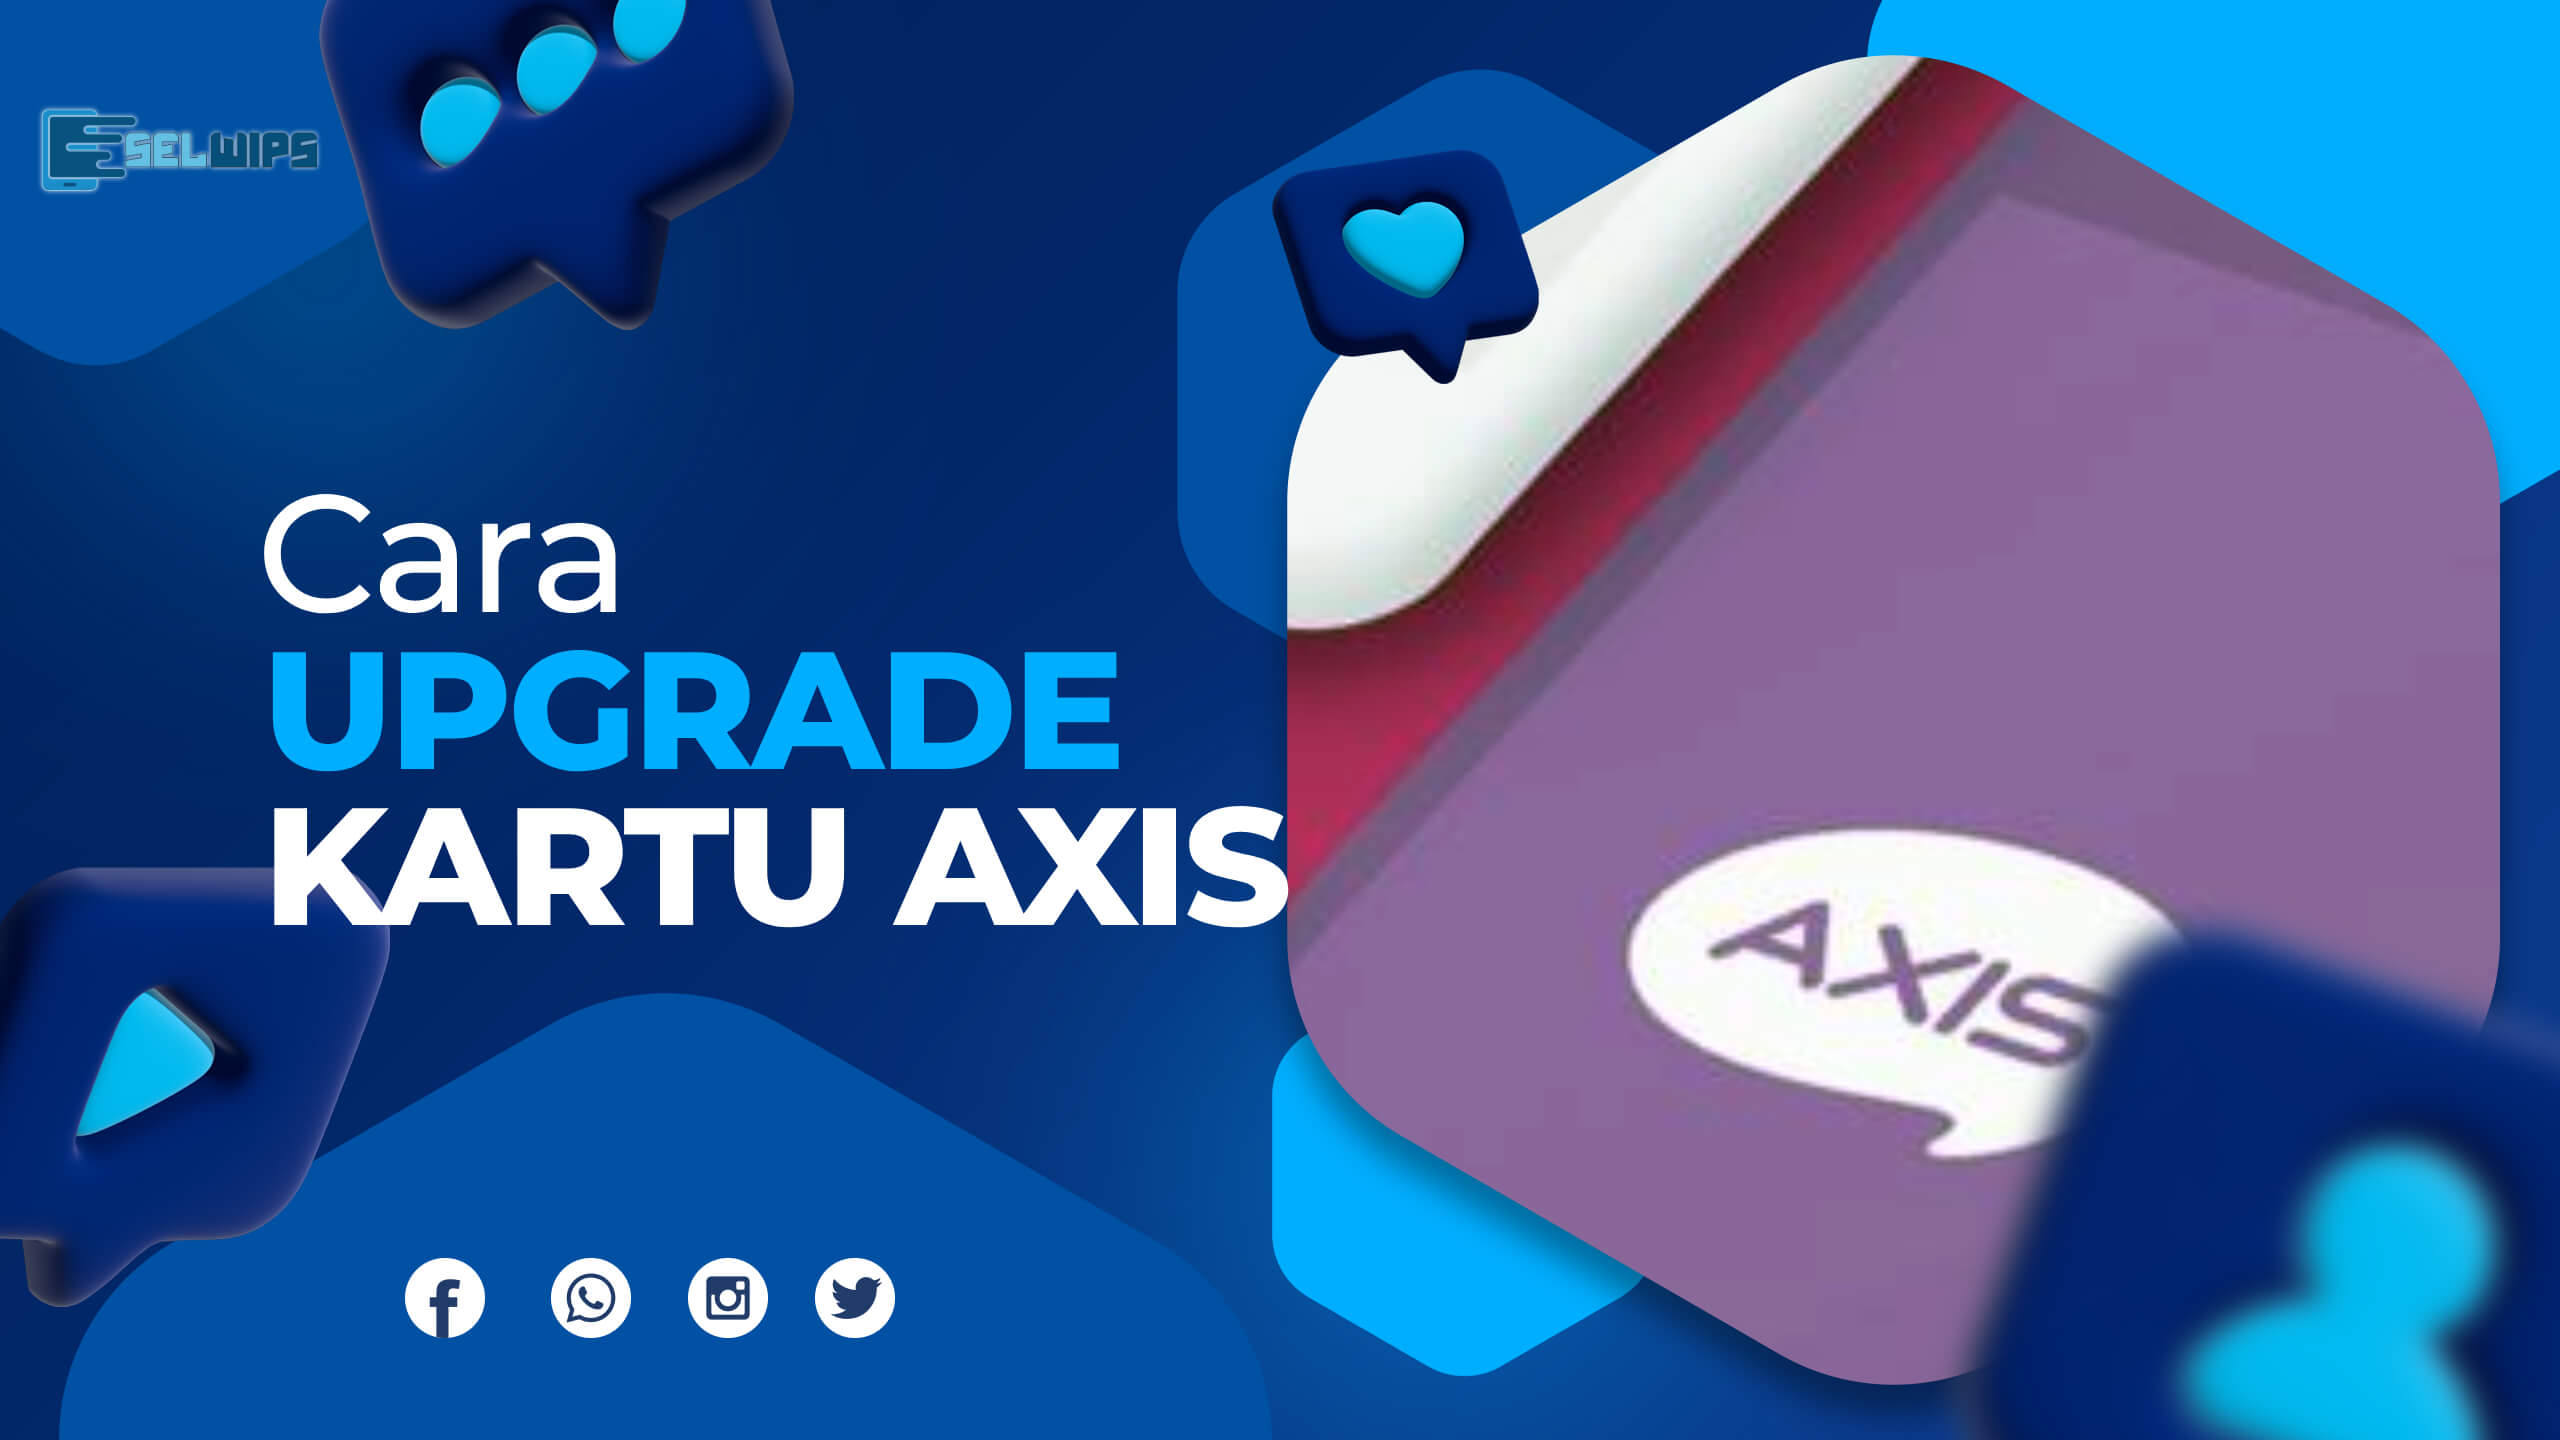 Cara Upgrade Kartu Axis 3G ke 4G